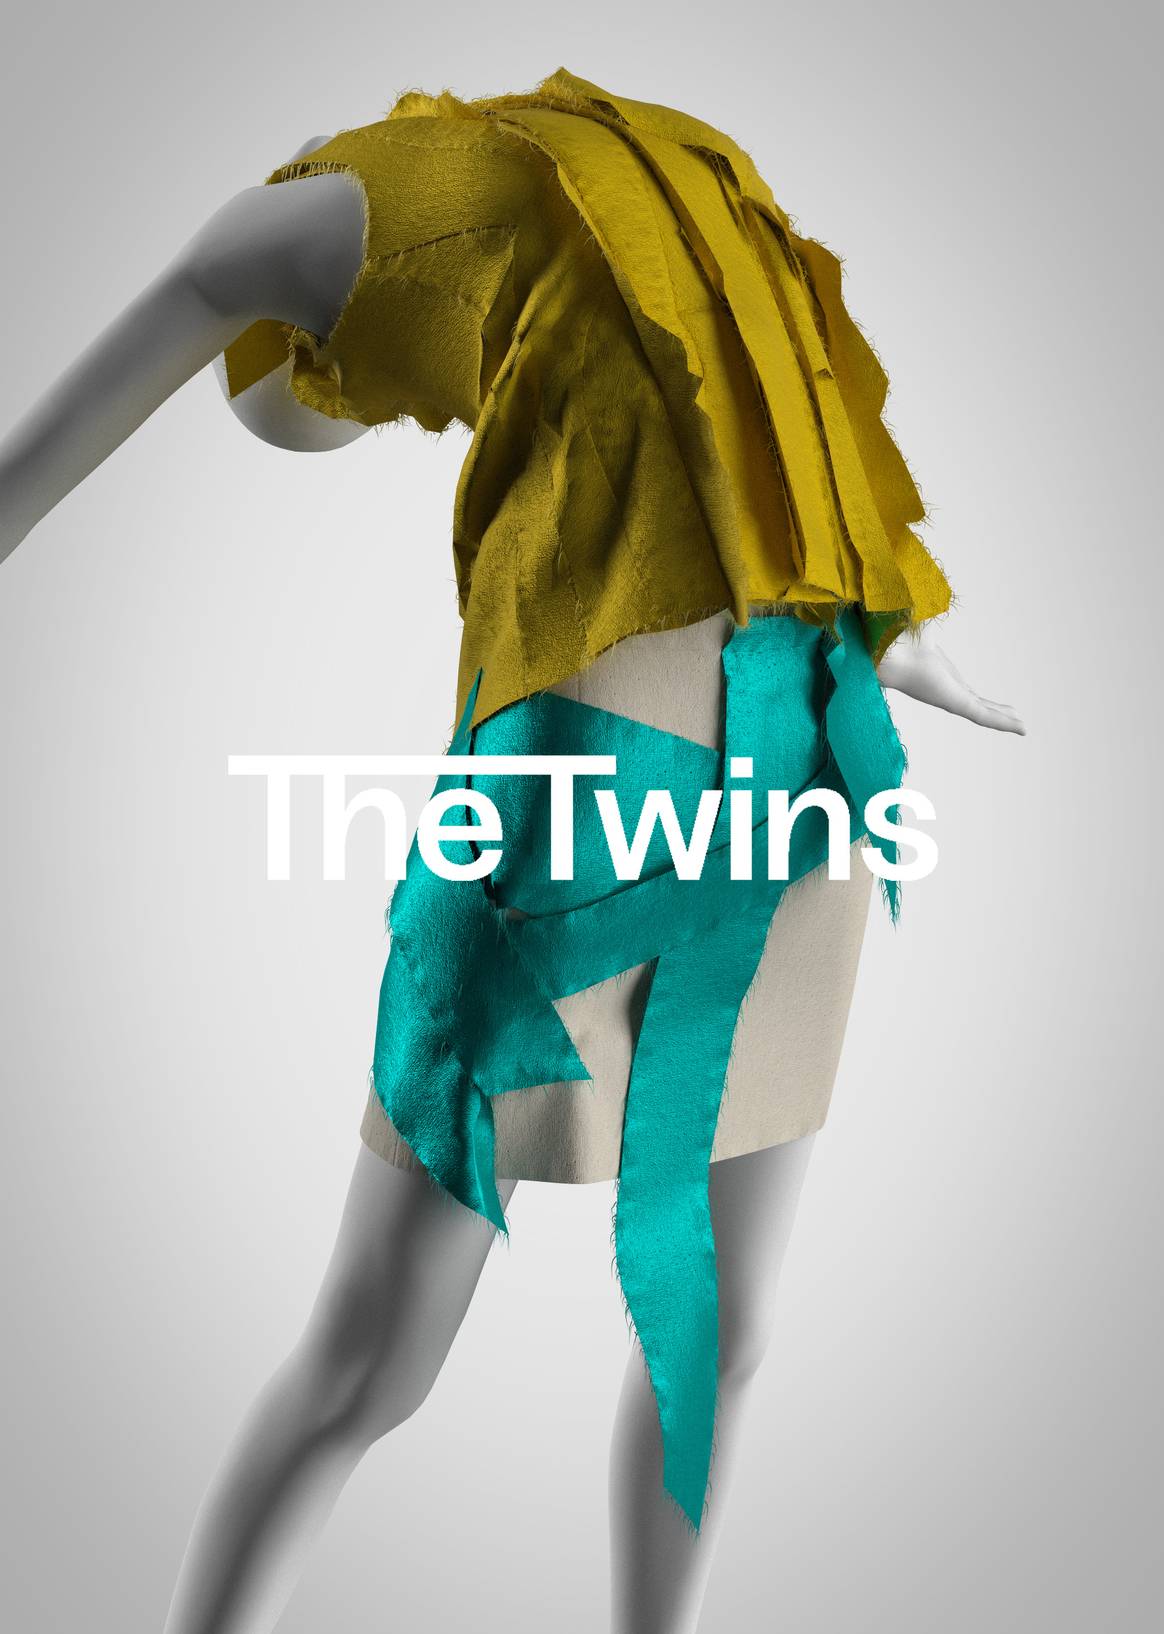 Bild: The Twins / studio747athens